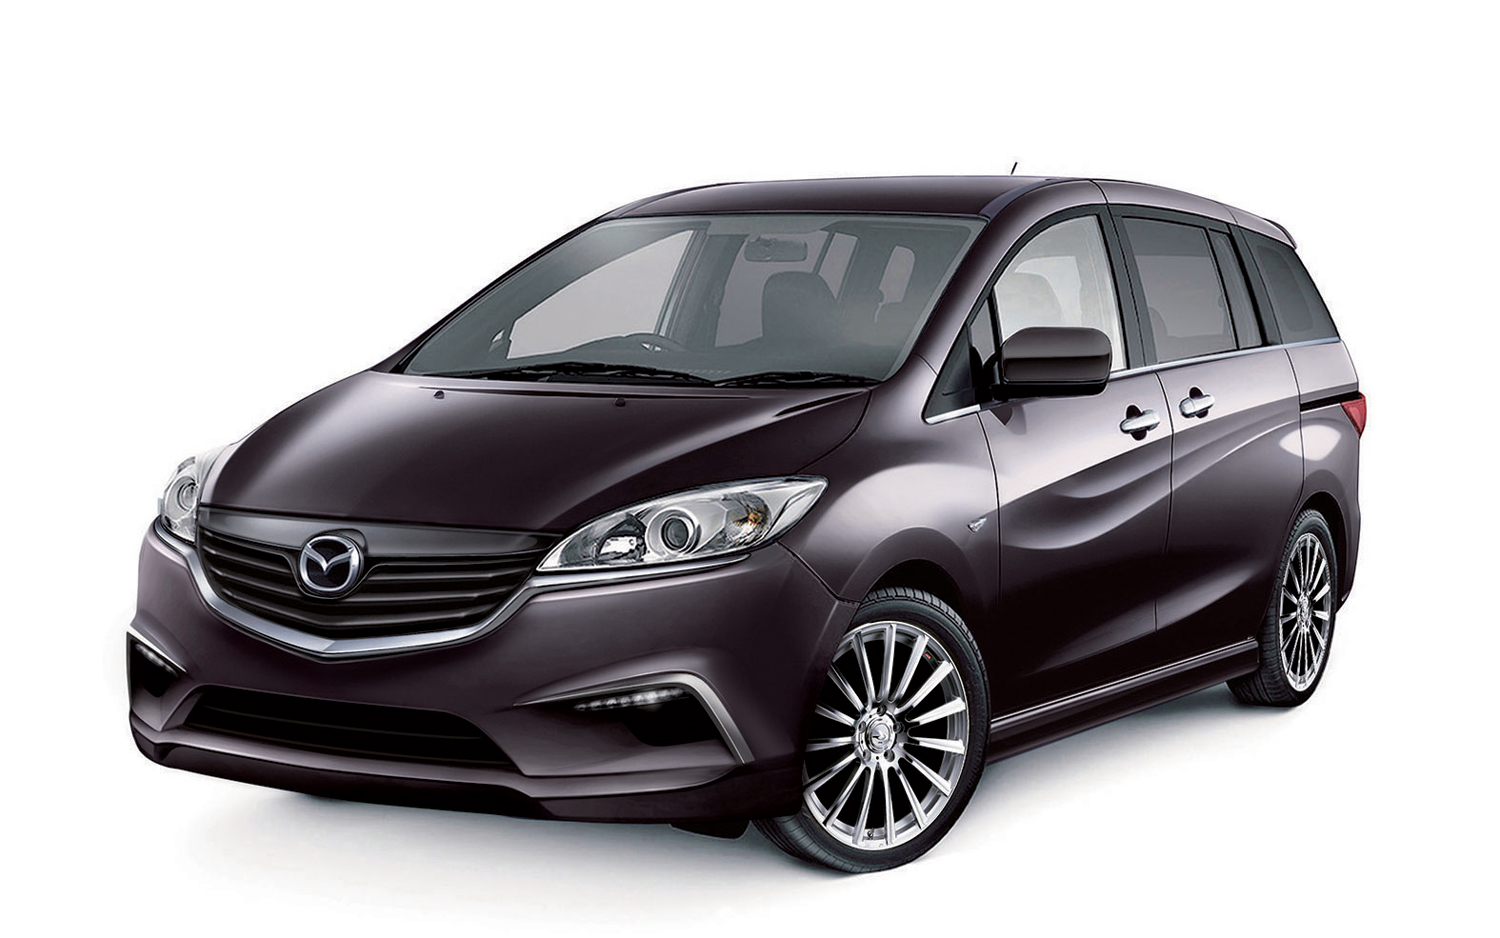 2012-Mazda-Premacy-20S-Prestige-Style-Front-Three-Quarter #151067 ...